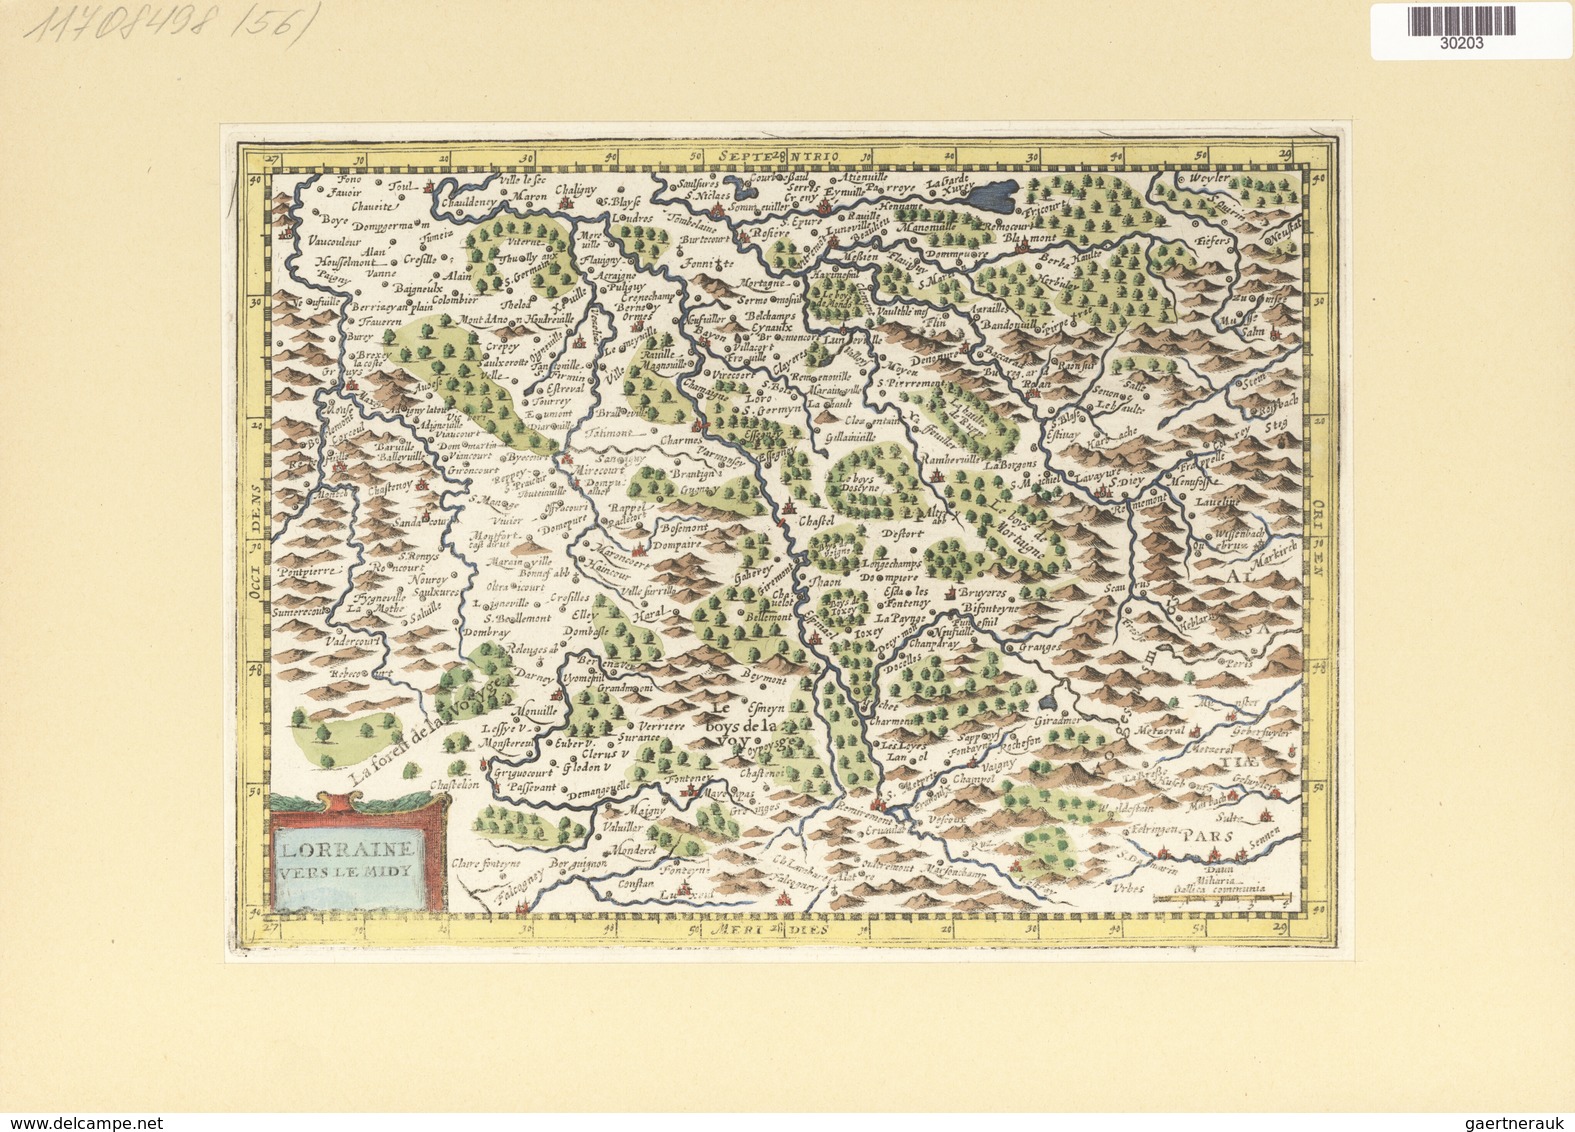 Landkarten Und Stiche: 1734. Lorraine Vers Le Midy, Published In The Mercator Atlas Minor 1734 Editi - Geography